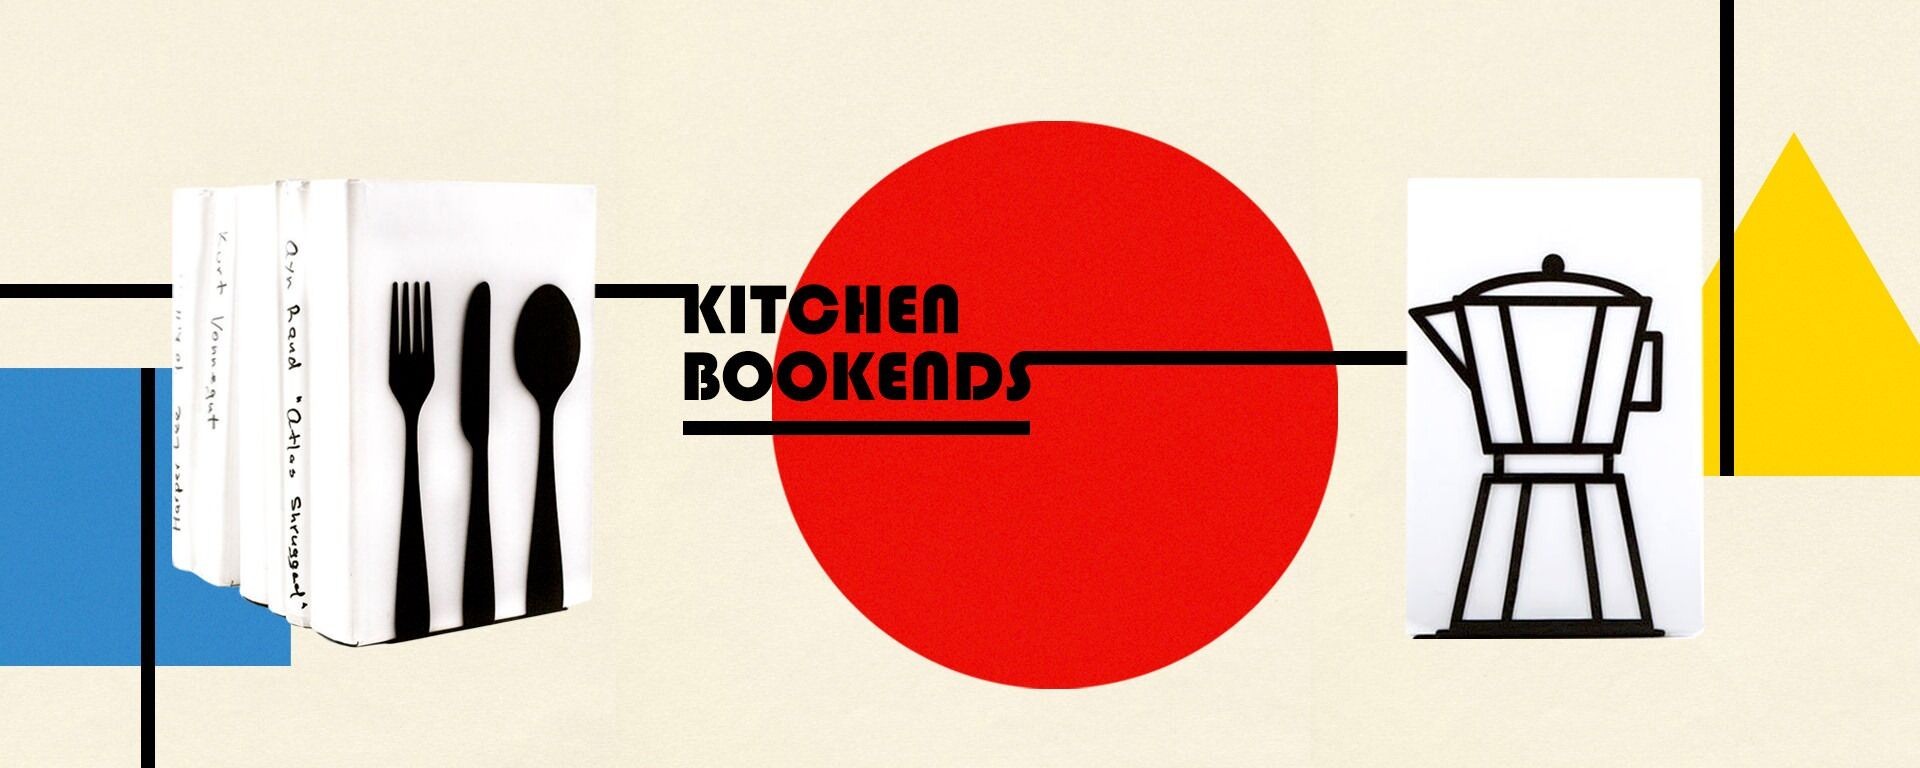 Bauhaus style Kitchen bookends